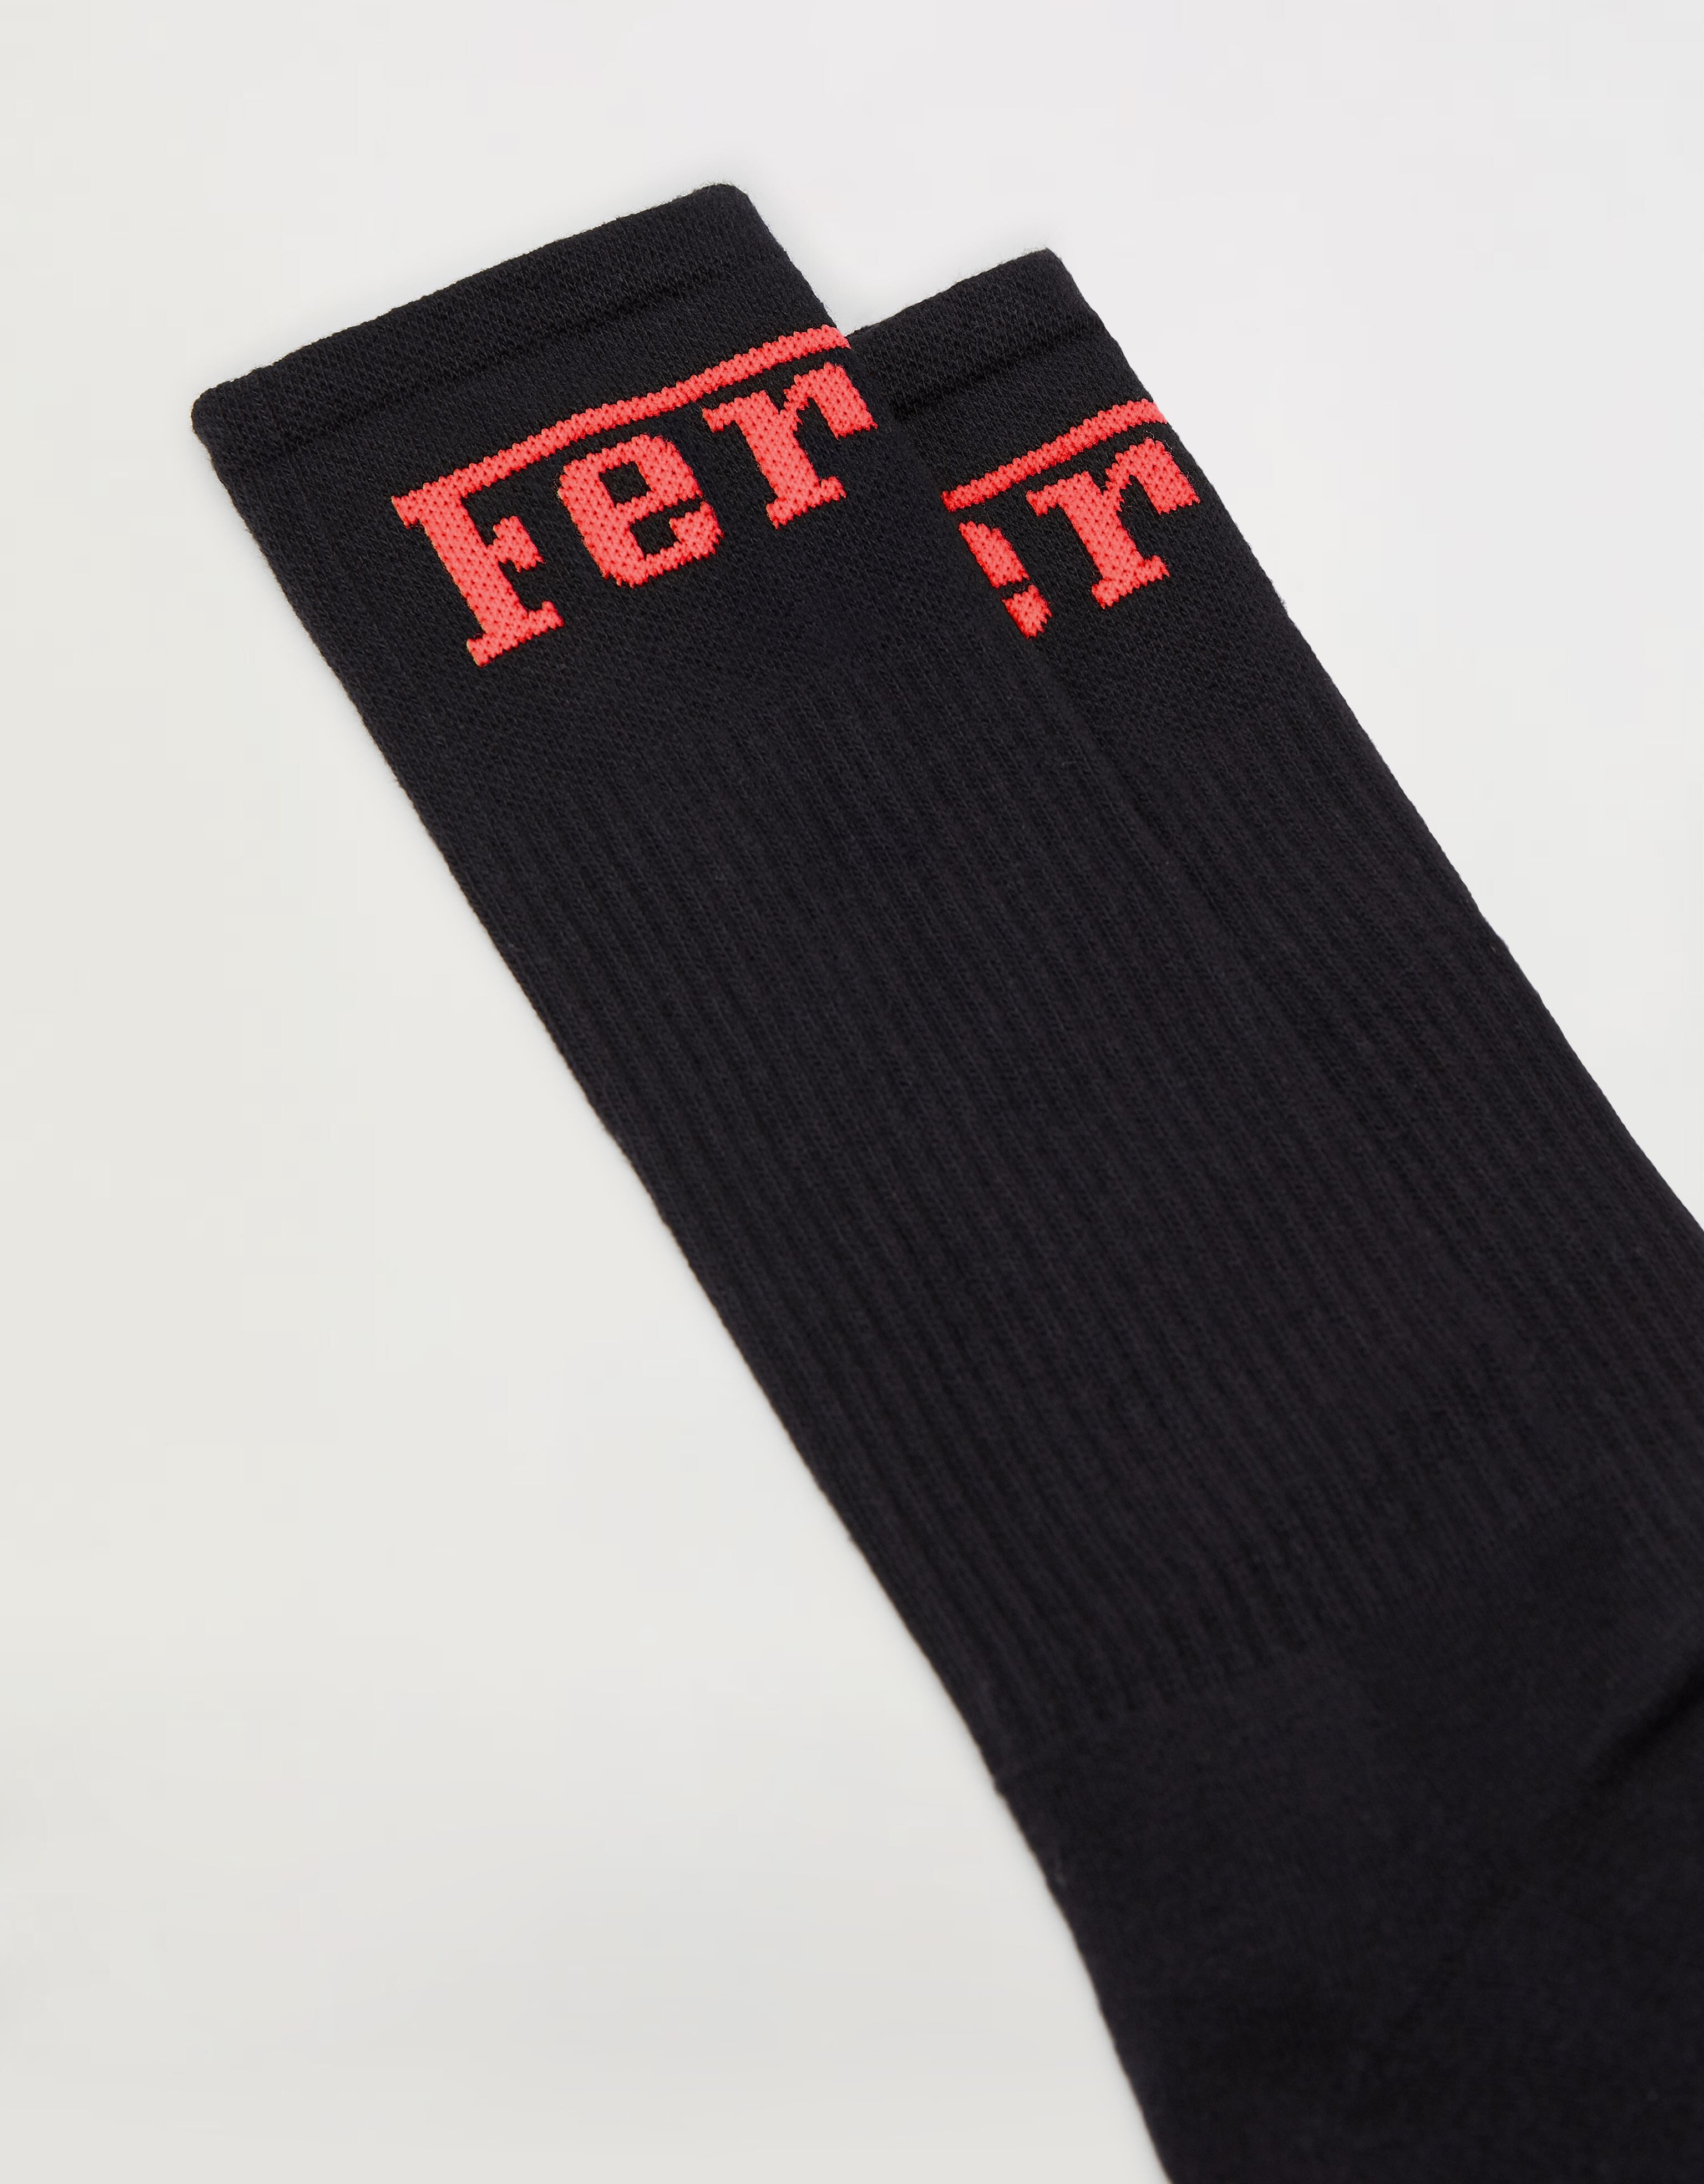 Ferrari Socken aus Baumwollmischung mit Ferrari-Logo Rosso Corsa 20007f